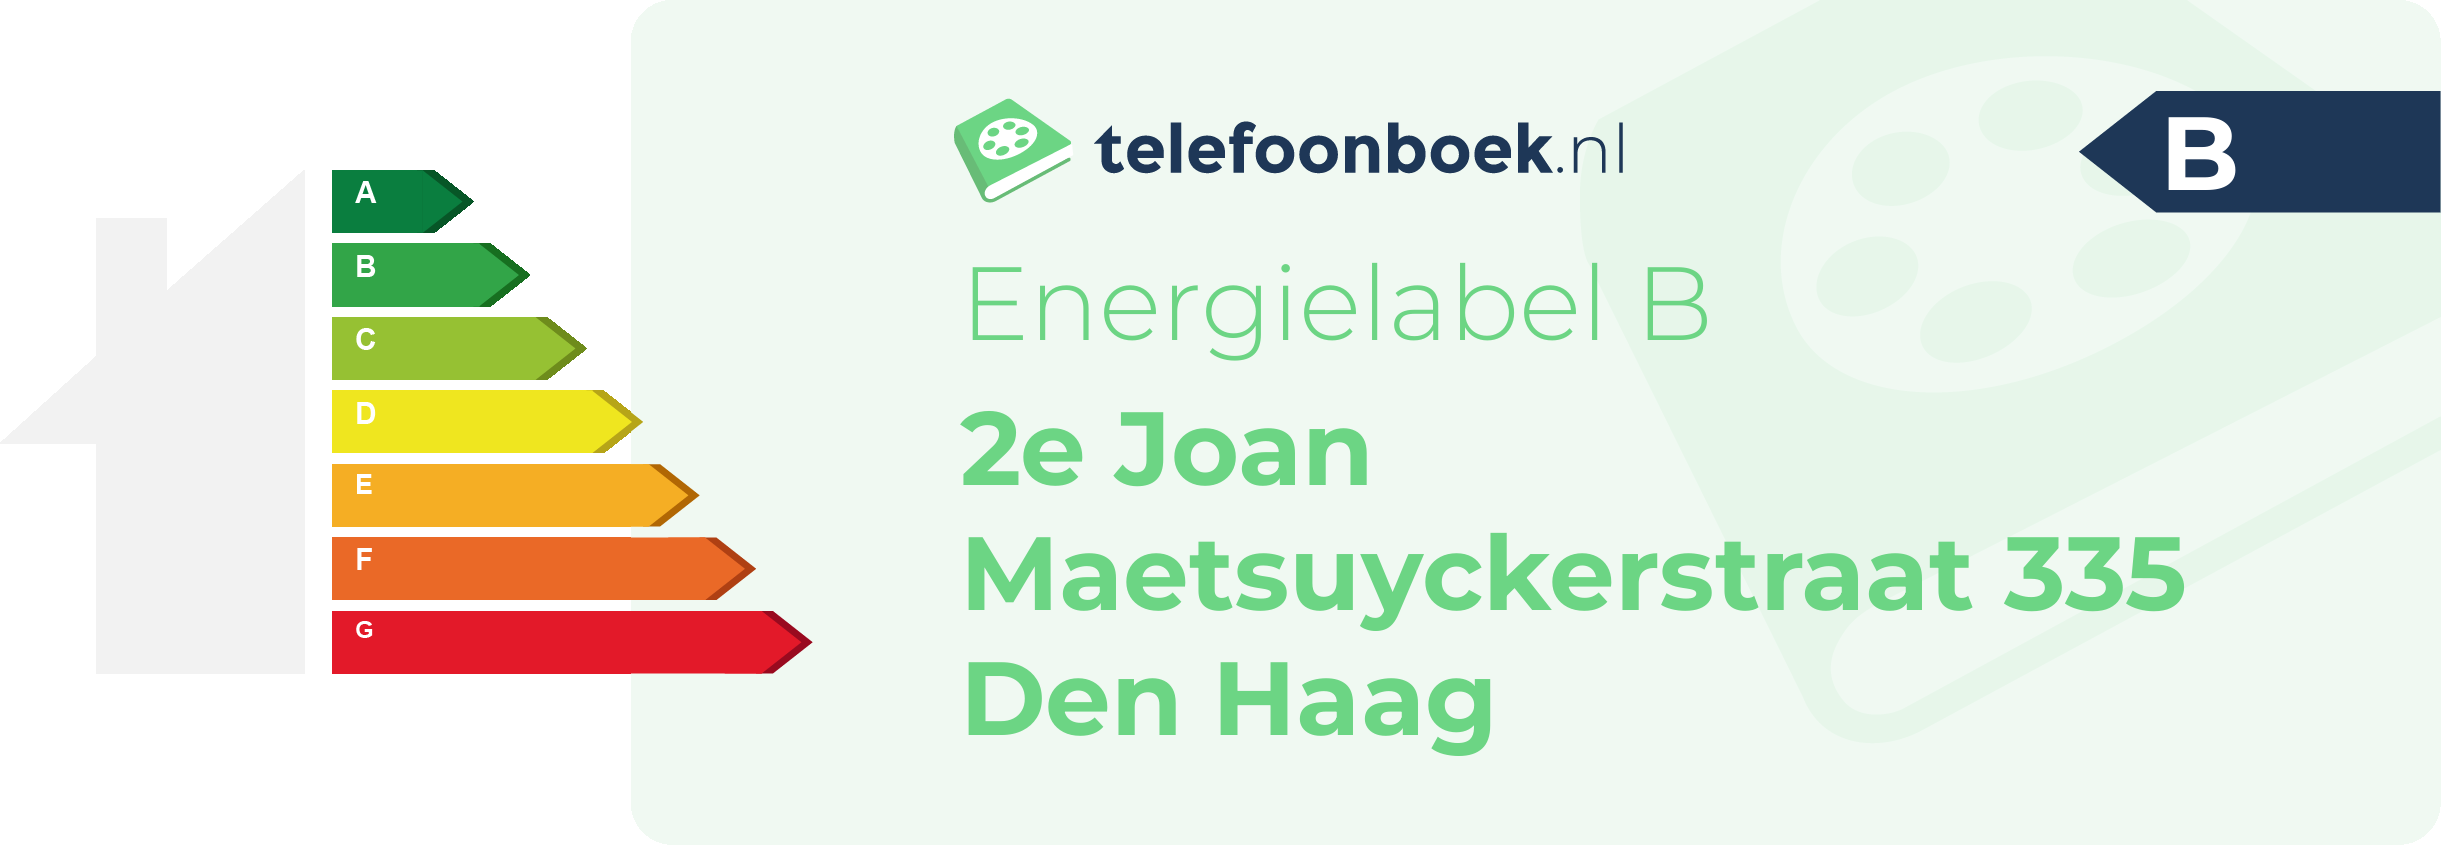 Energielabel 2e Joan Maetsuyckerstraat 335 Den Haag